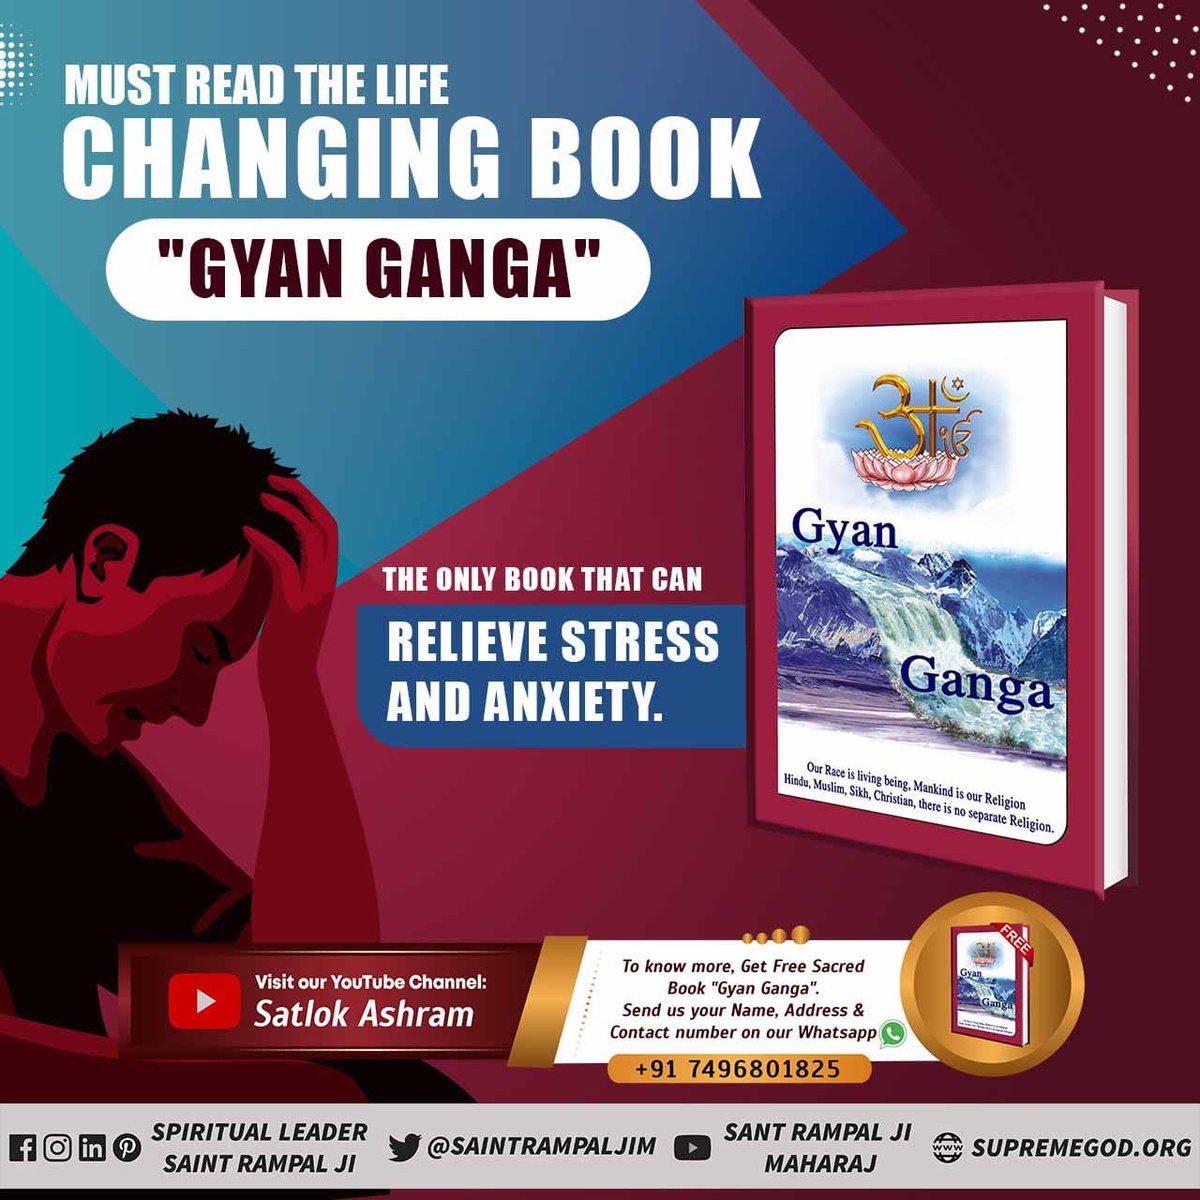 #मानसिक_शांति_नहींतो_कुछनहीं 
The book that can relieve stress, depression and anxiety and relax your mind. 
Must read the life changing book 'GYAN GANGA'.
@SaintRampalJiM